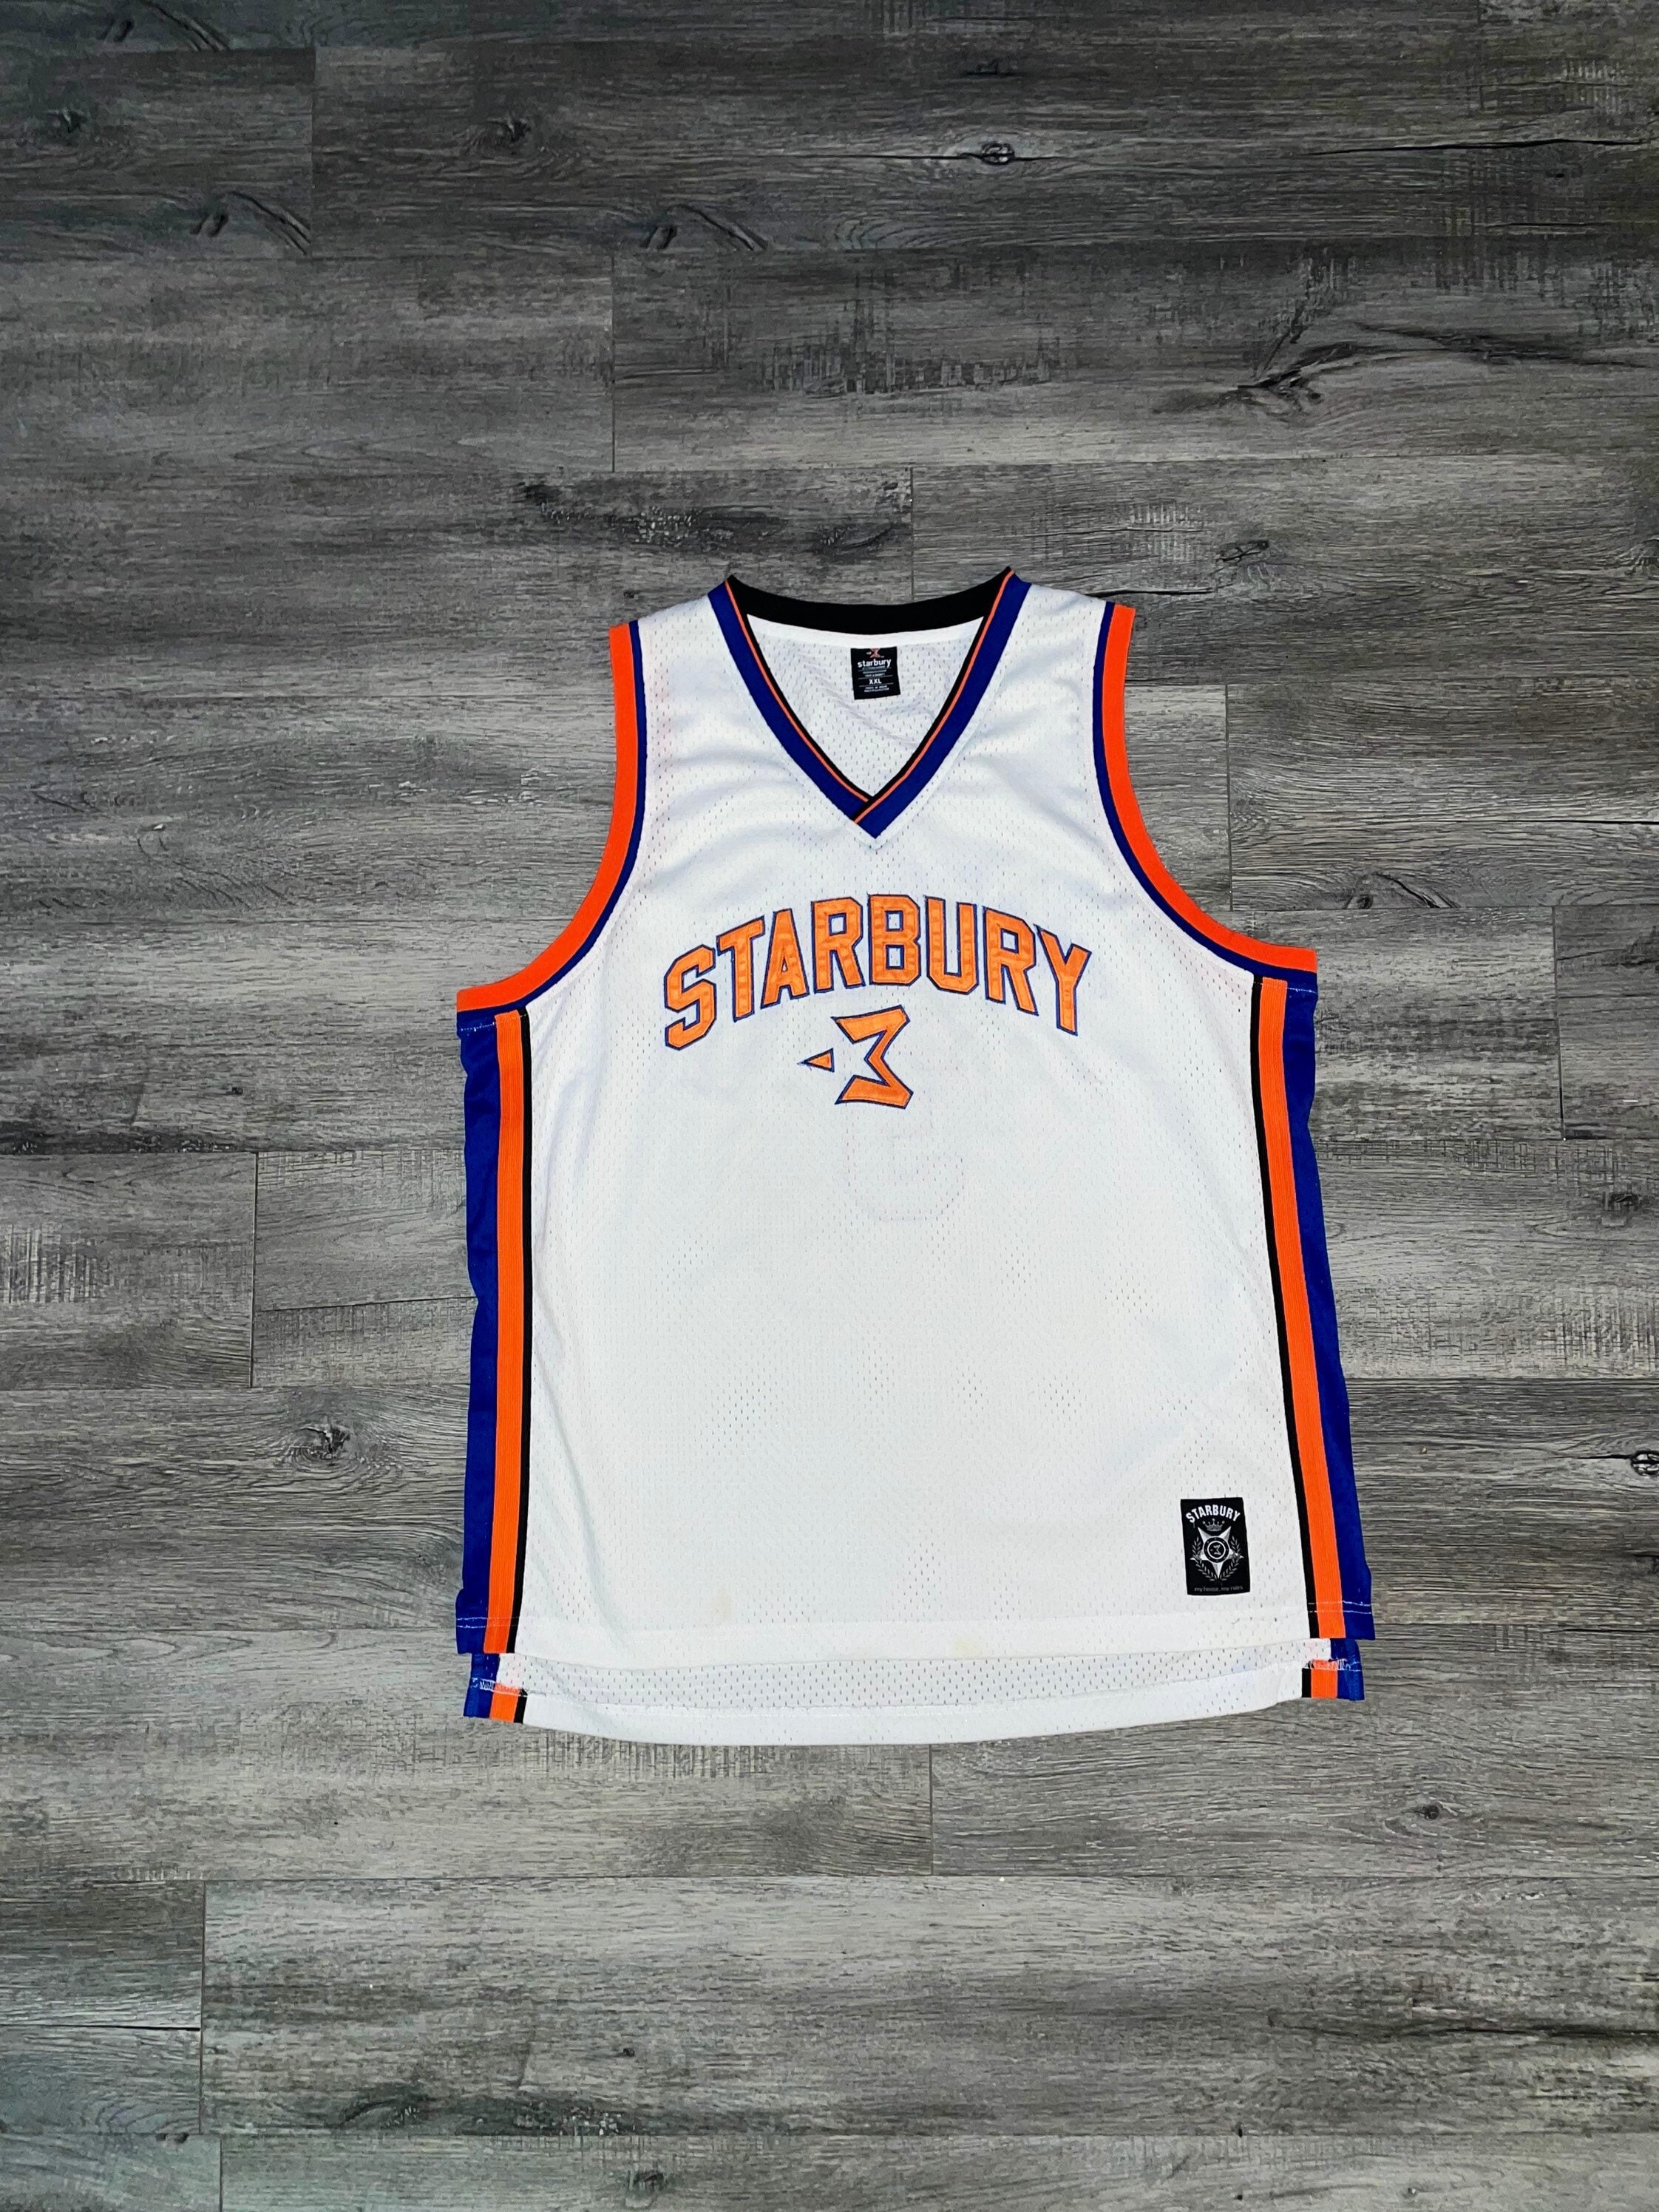 Nike NBA Phoenix Suns Stephon Marbury #3 Basketball Jersey Orange adult xxl